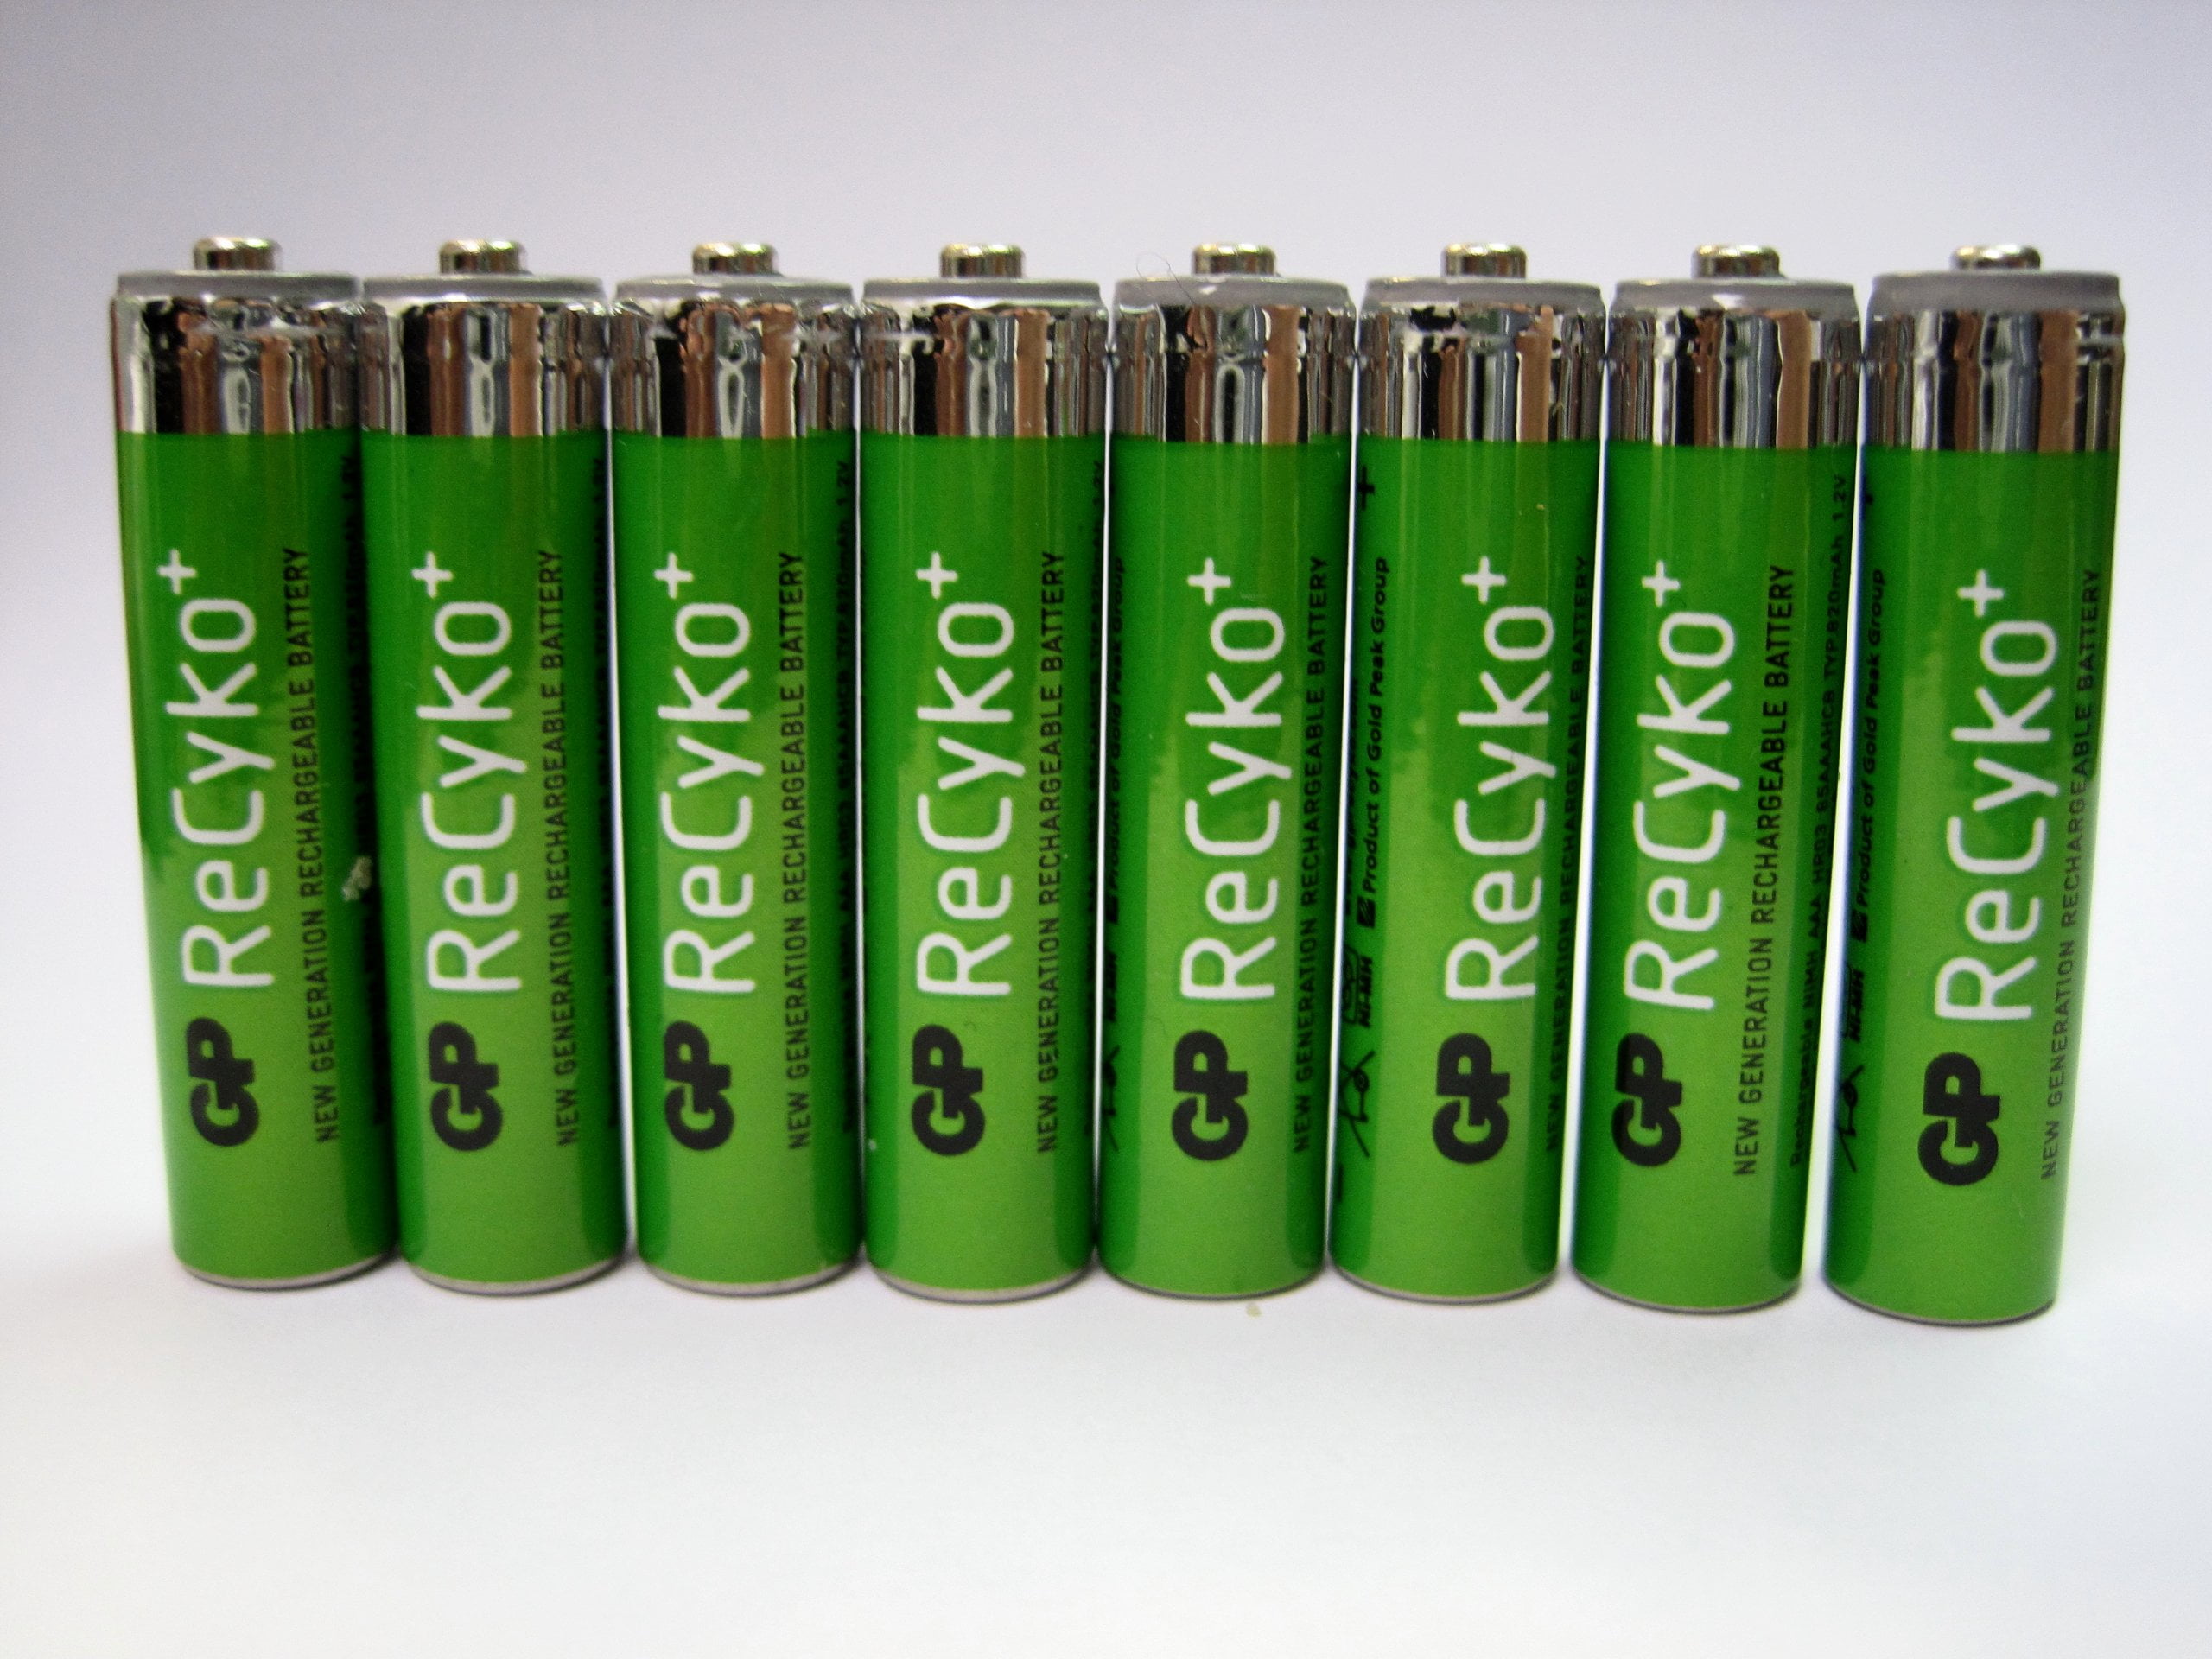 Basics Lot de 8 piles rechargeables Ni-MH Type AAA 1000 cycles à 800  mAh/m - Cdiscount Jeux - Jouets